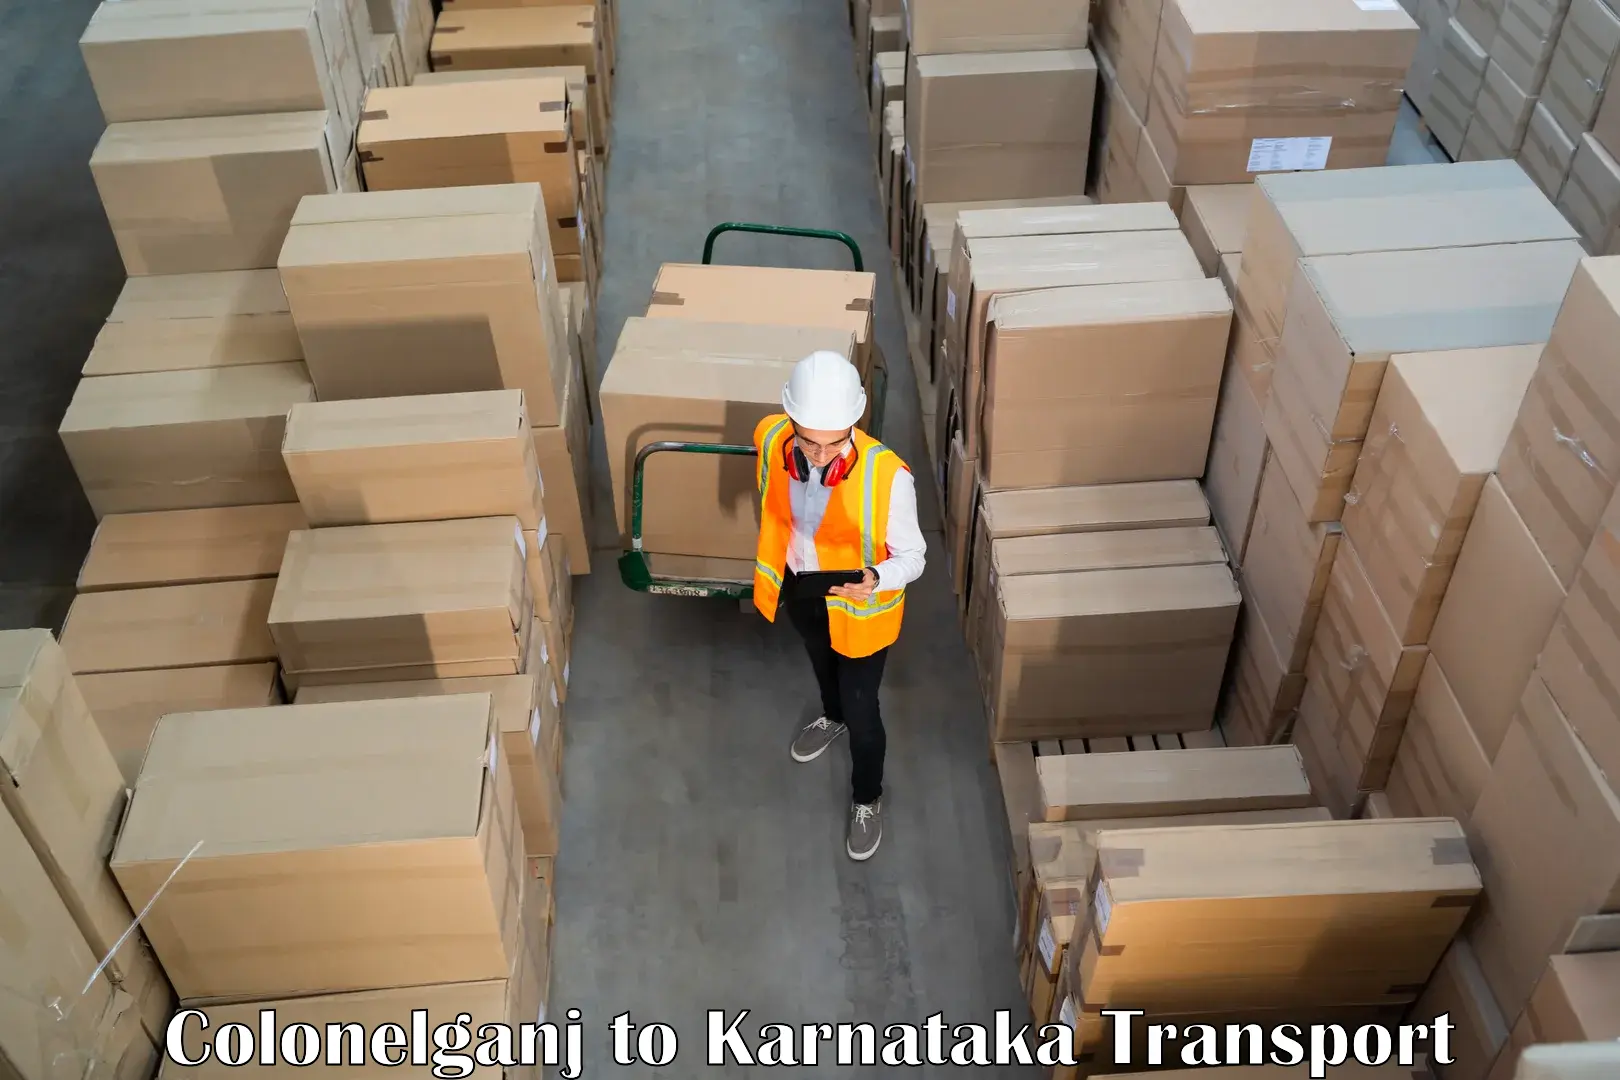 Truck transport companies in India Colonelganj to Soraba